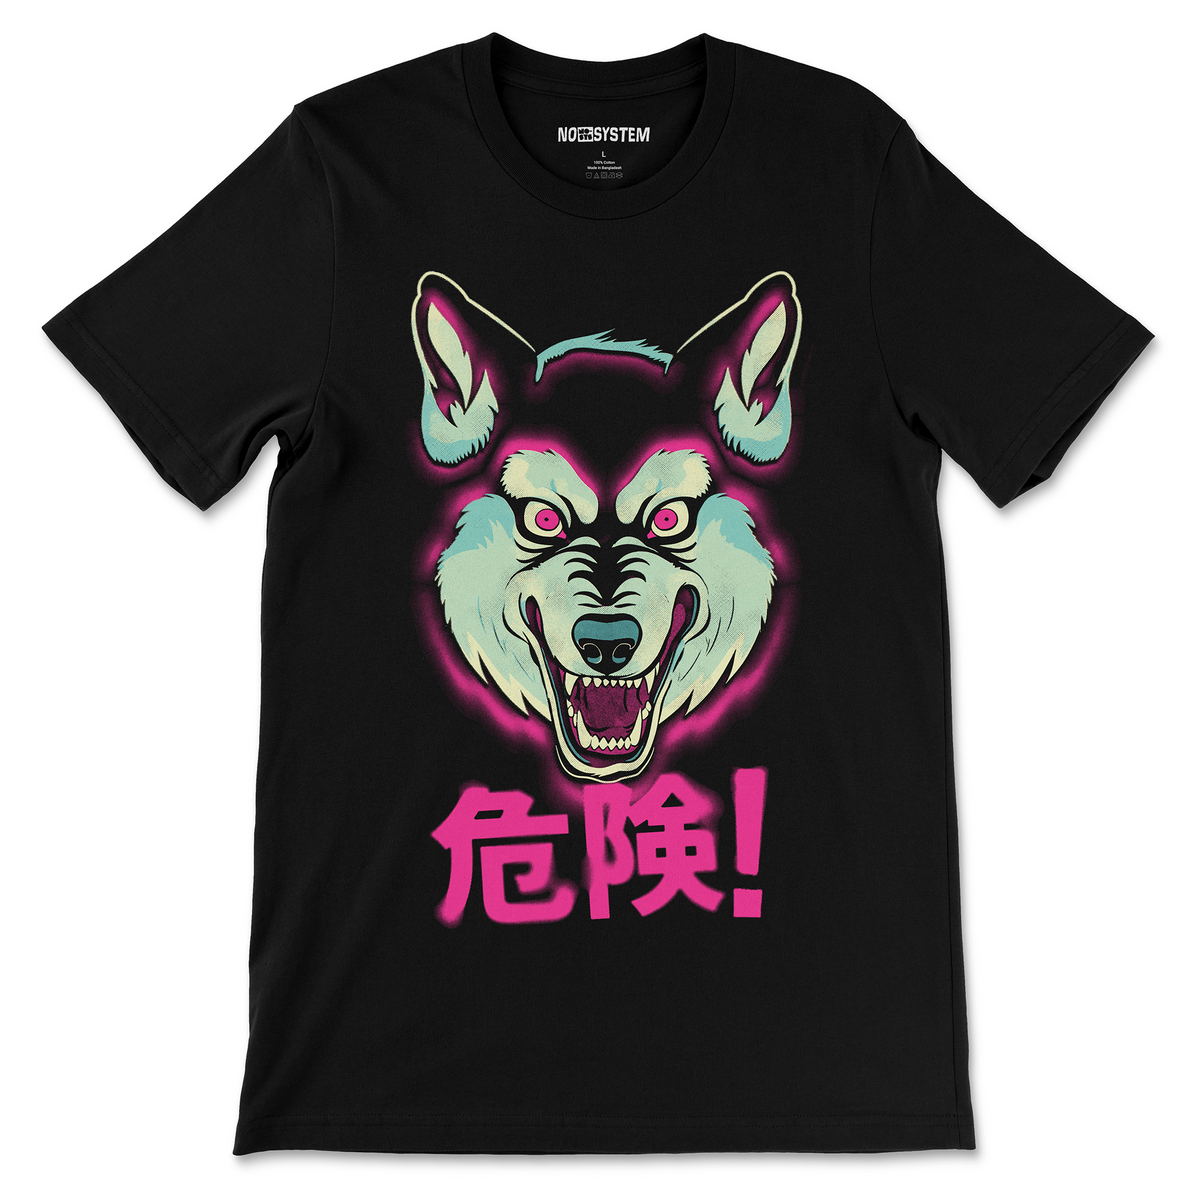 Caution Dog! crewneck t-shirt